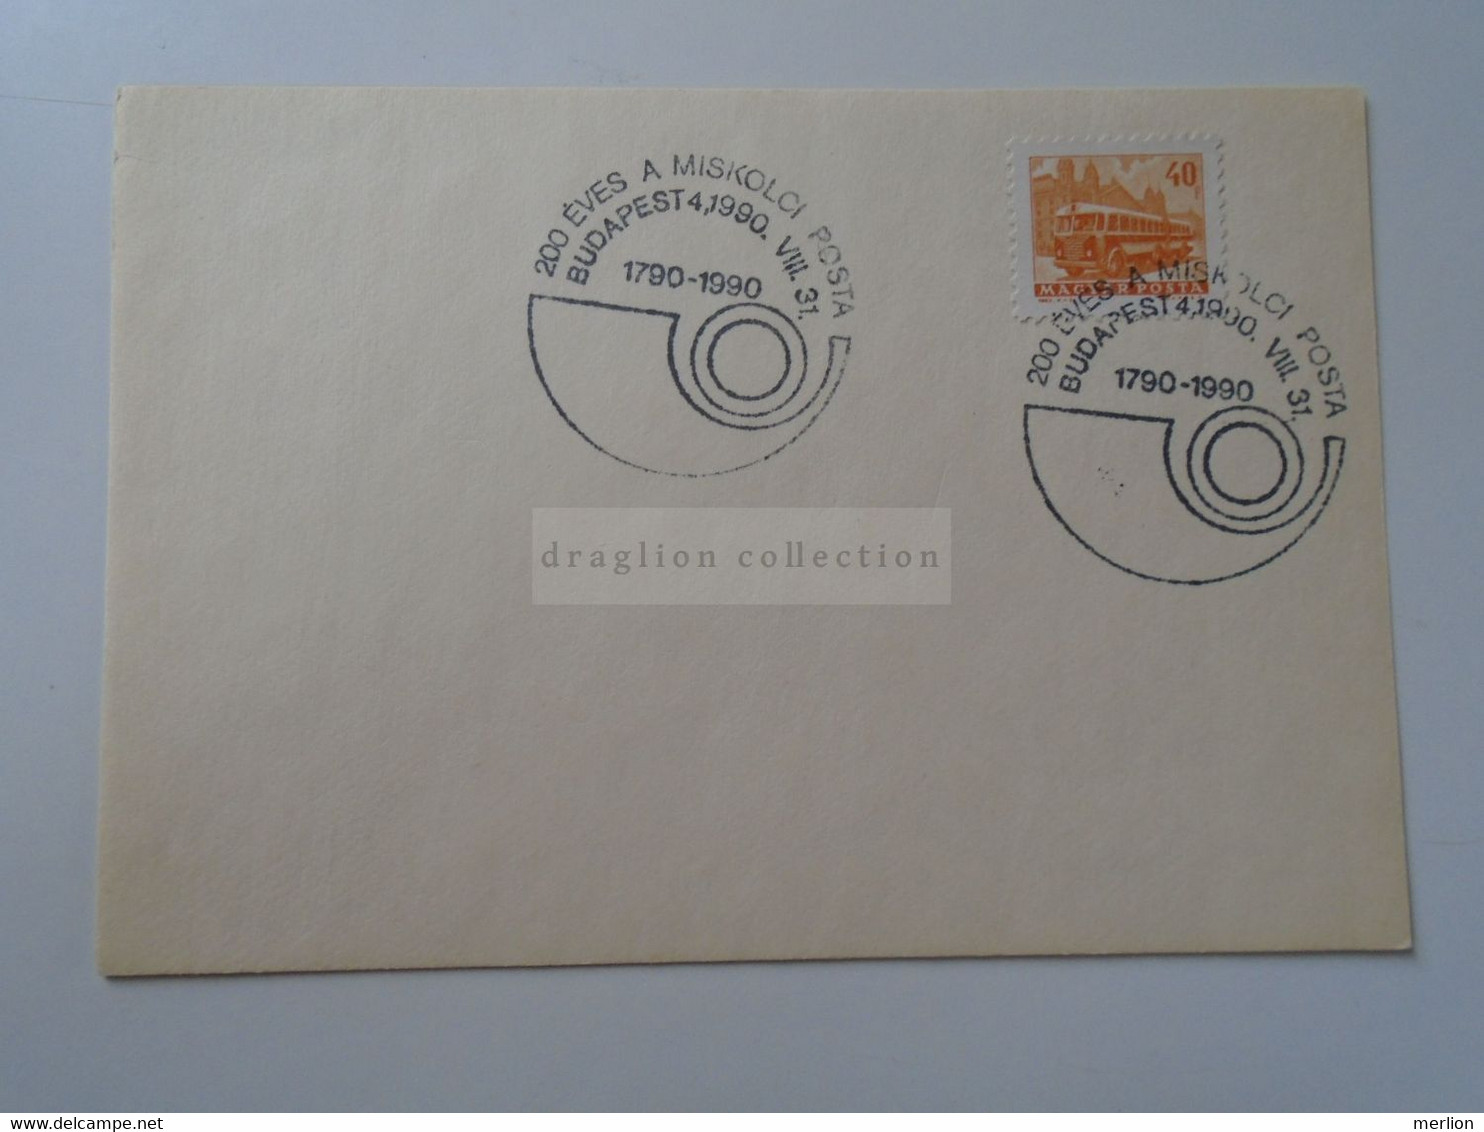 D187084   HUNGARY  Postmark     MAGYAR POSTA   - Hungarian Post - 200 éves  A Miskolci Posta  1790-1990 - Poststempel (Marcophilie)